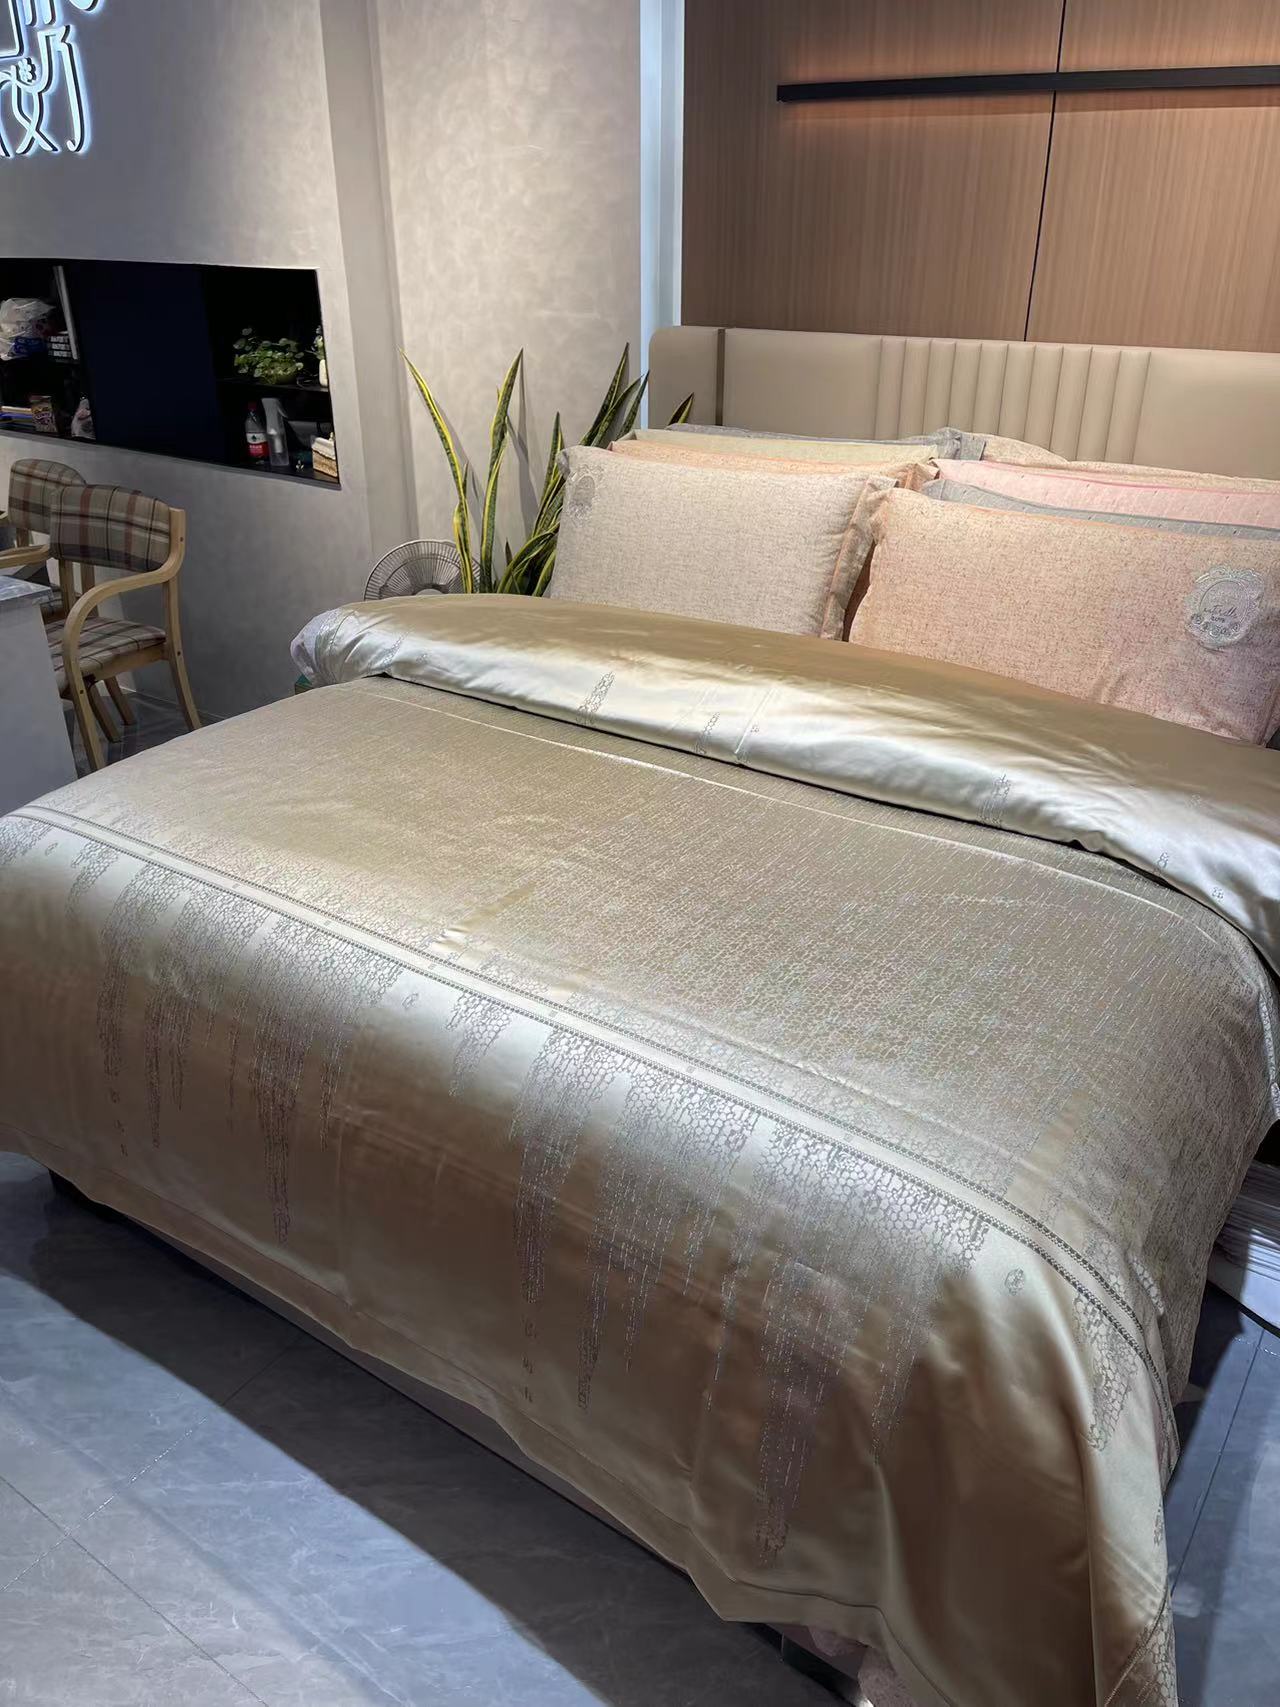 four-piece-bedding-sethigh-end-zen-silk-trend-of-the-times2021-b013804